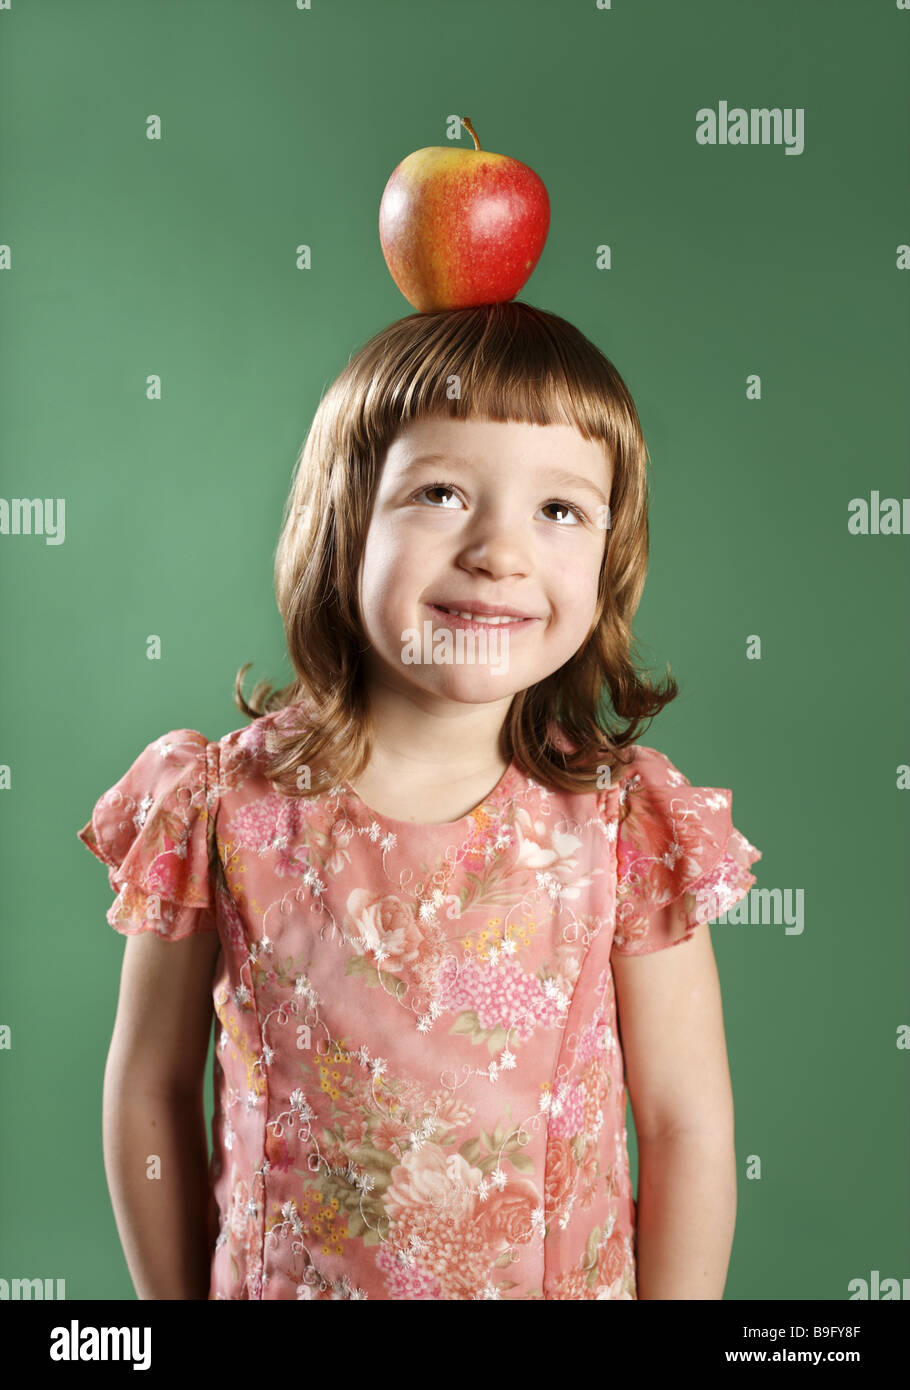 Child girl cheerfully 5-7 years balance head apple semi-portrait girls dark-blond dress happily cheerfully freely confidently Stock Photo